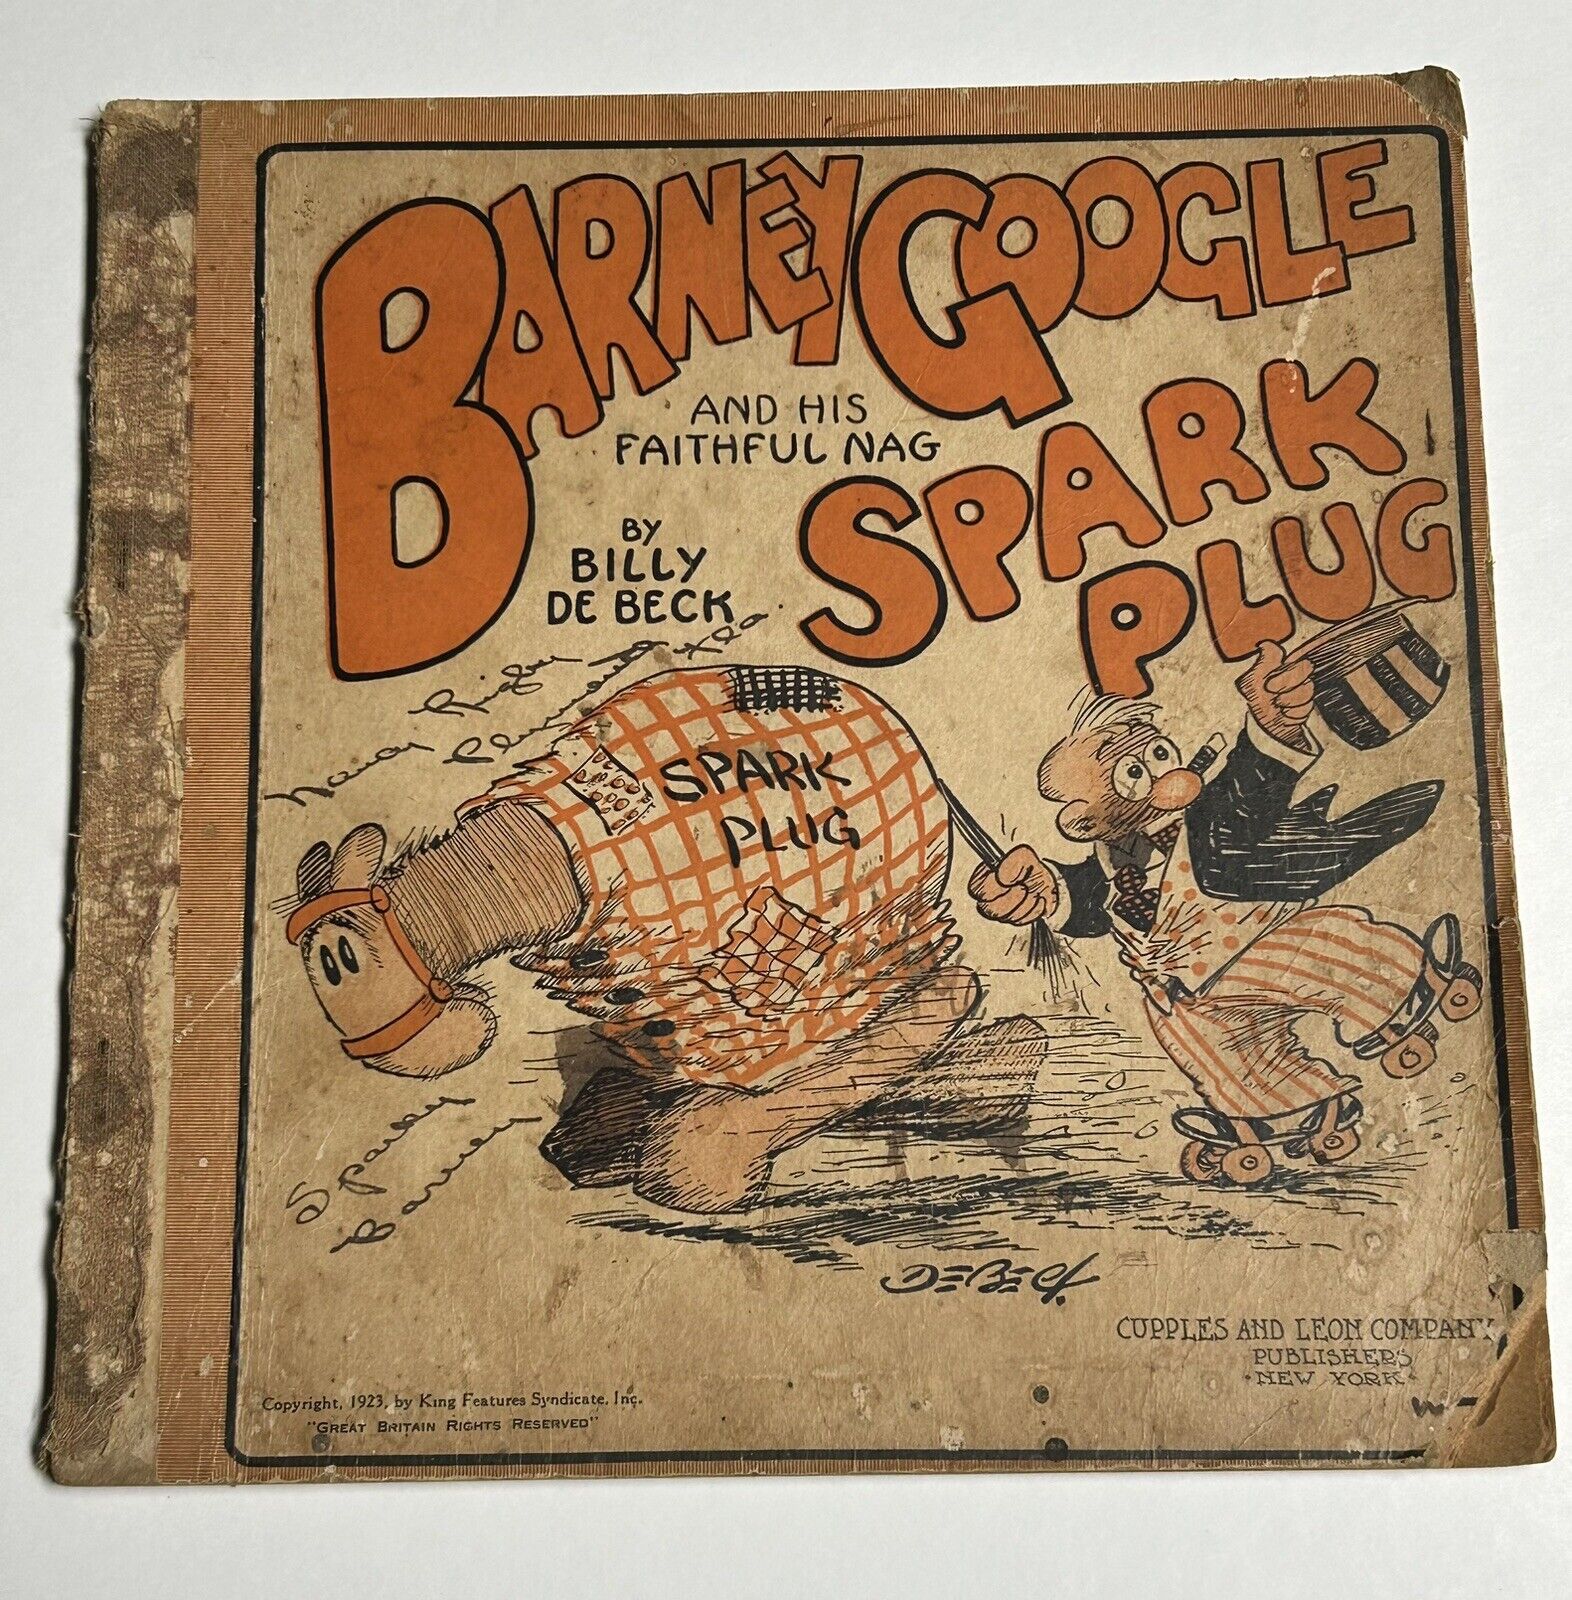 Barney Google and Spark Plug comic book 1923 (Vintage)